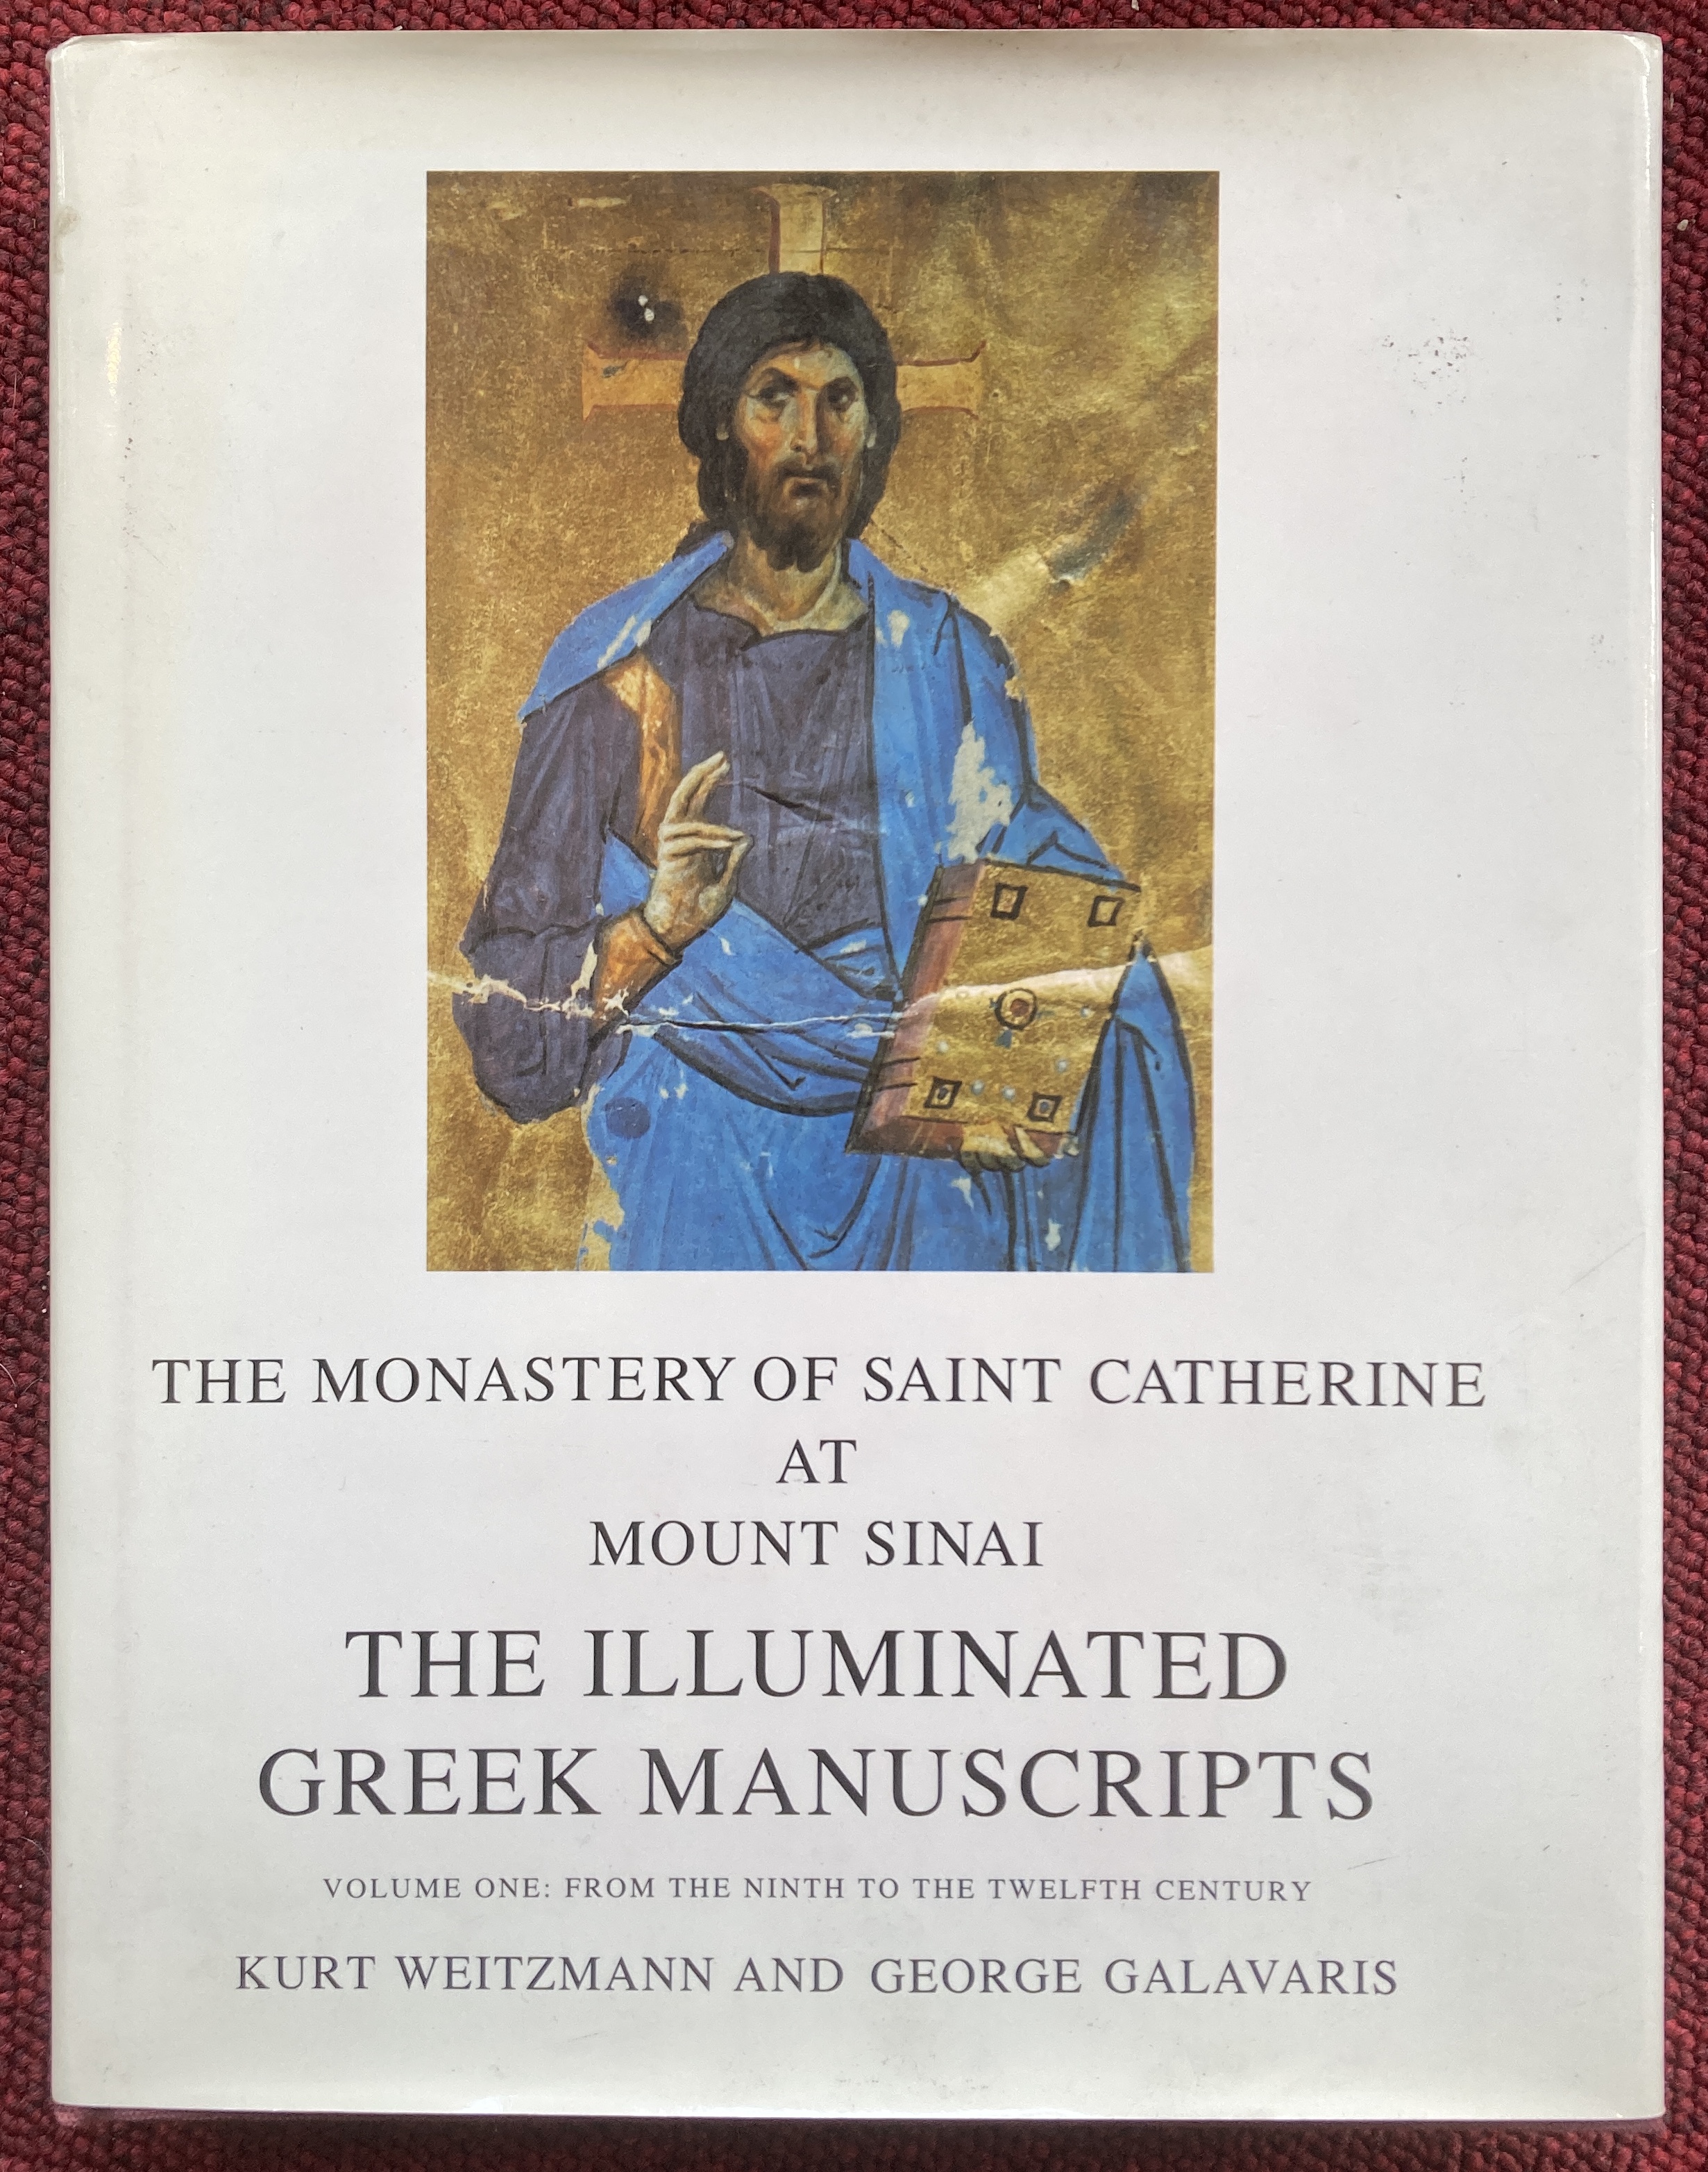 THE MONASTERY OF SAINT CATHERINE AT MOUNT SINAI. THE ILLUMINATED GREEK MANUSCRIPTS. VOLUME ONE: FROM THE NINTH TO THE TWELFTH CENTURY. - Kurt Weitzmann and George Galavaris.